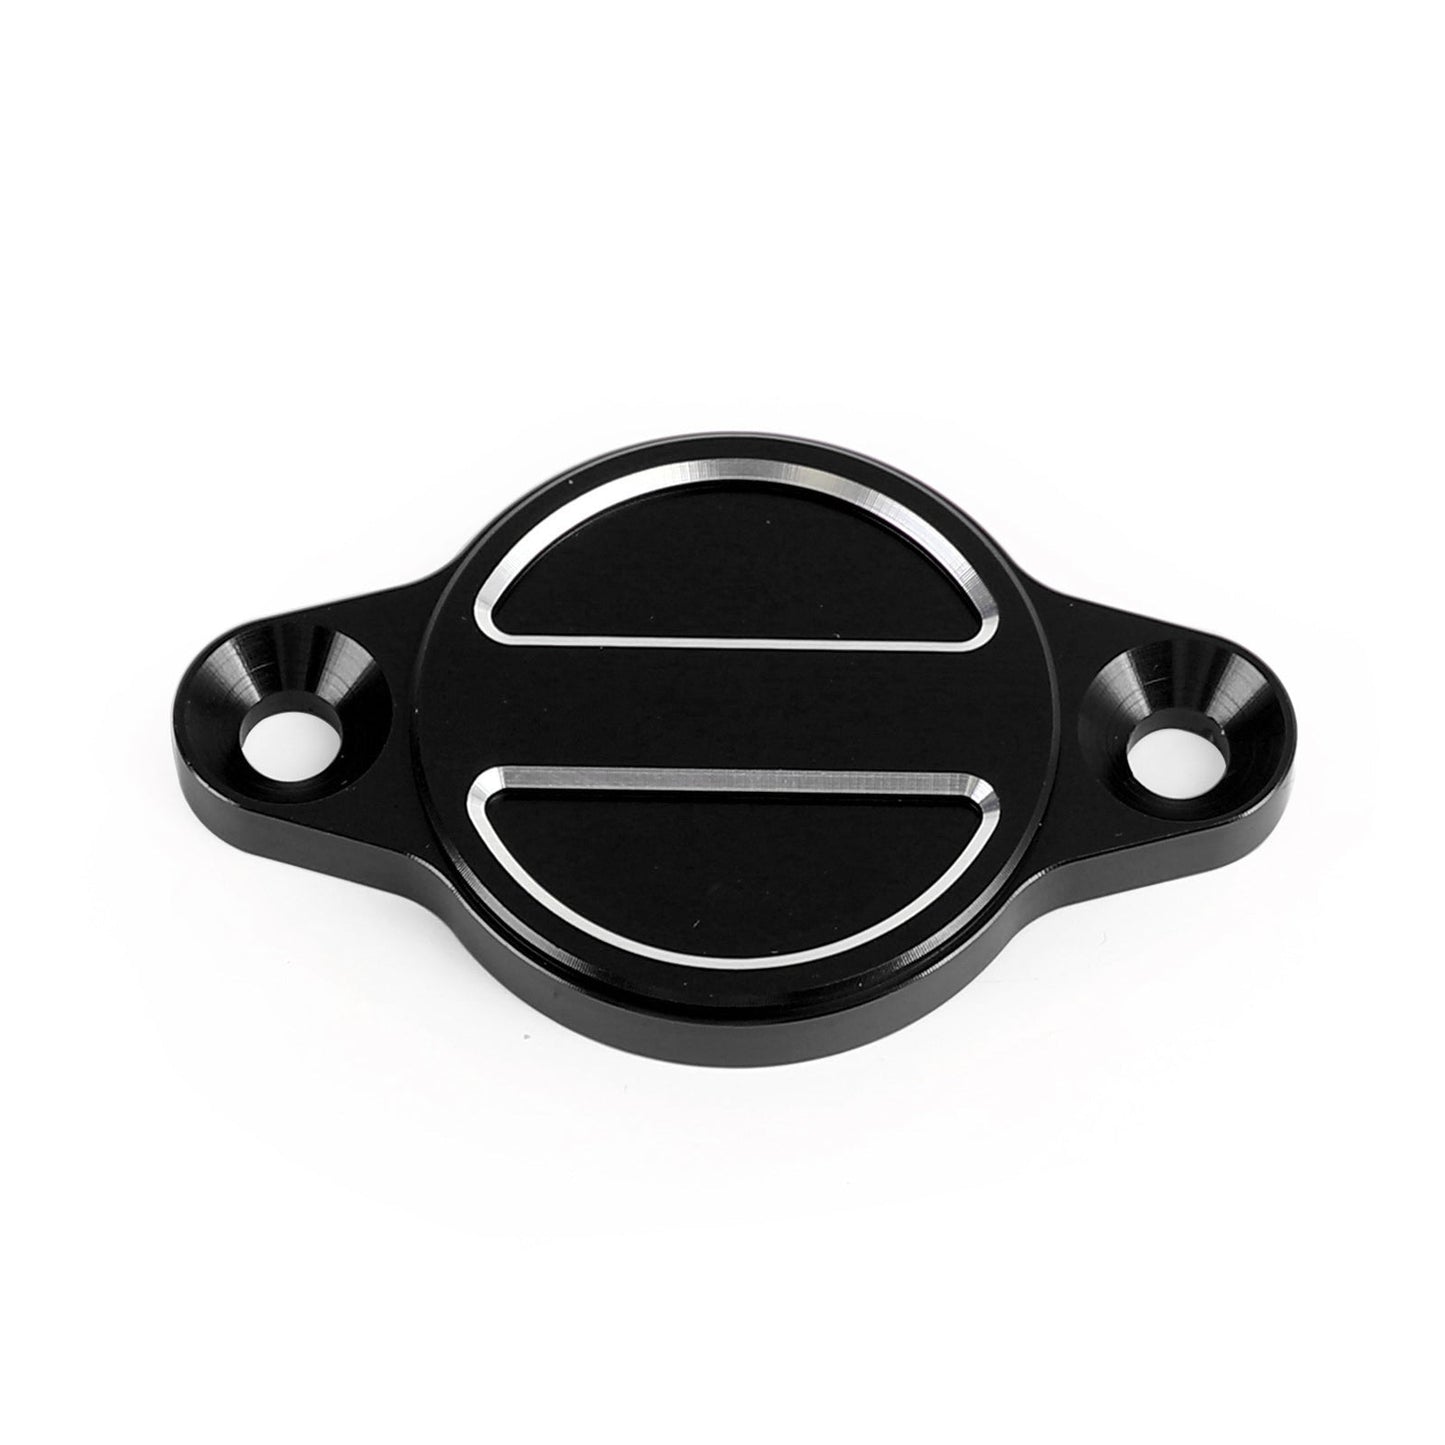 CNC Engine Oil Filter Cap Cover For Ducati Monster 696 821 937 1100 1200 Black